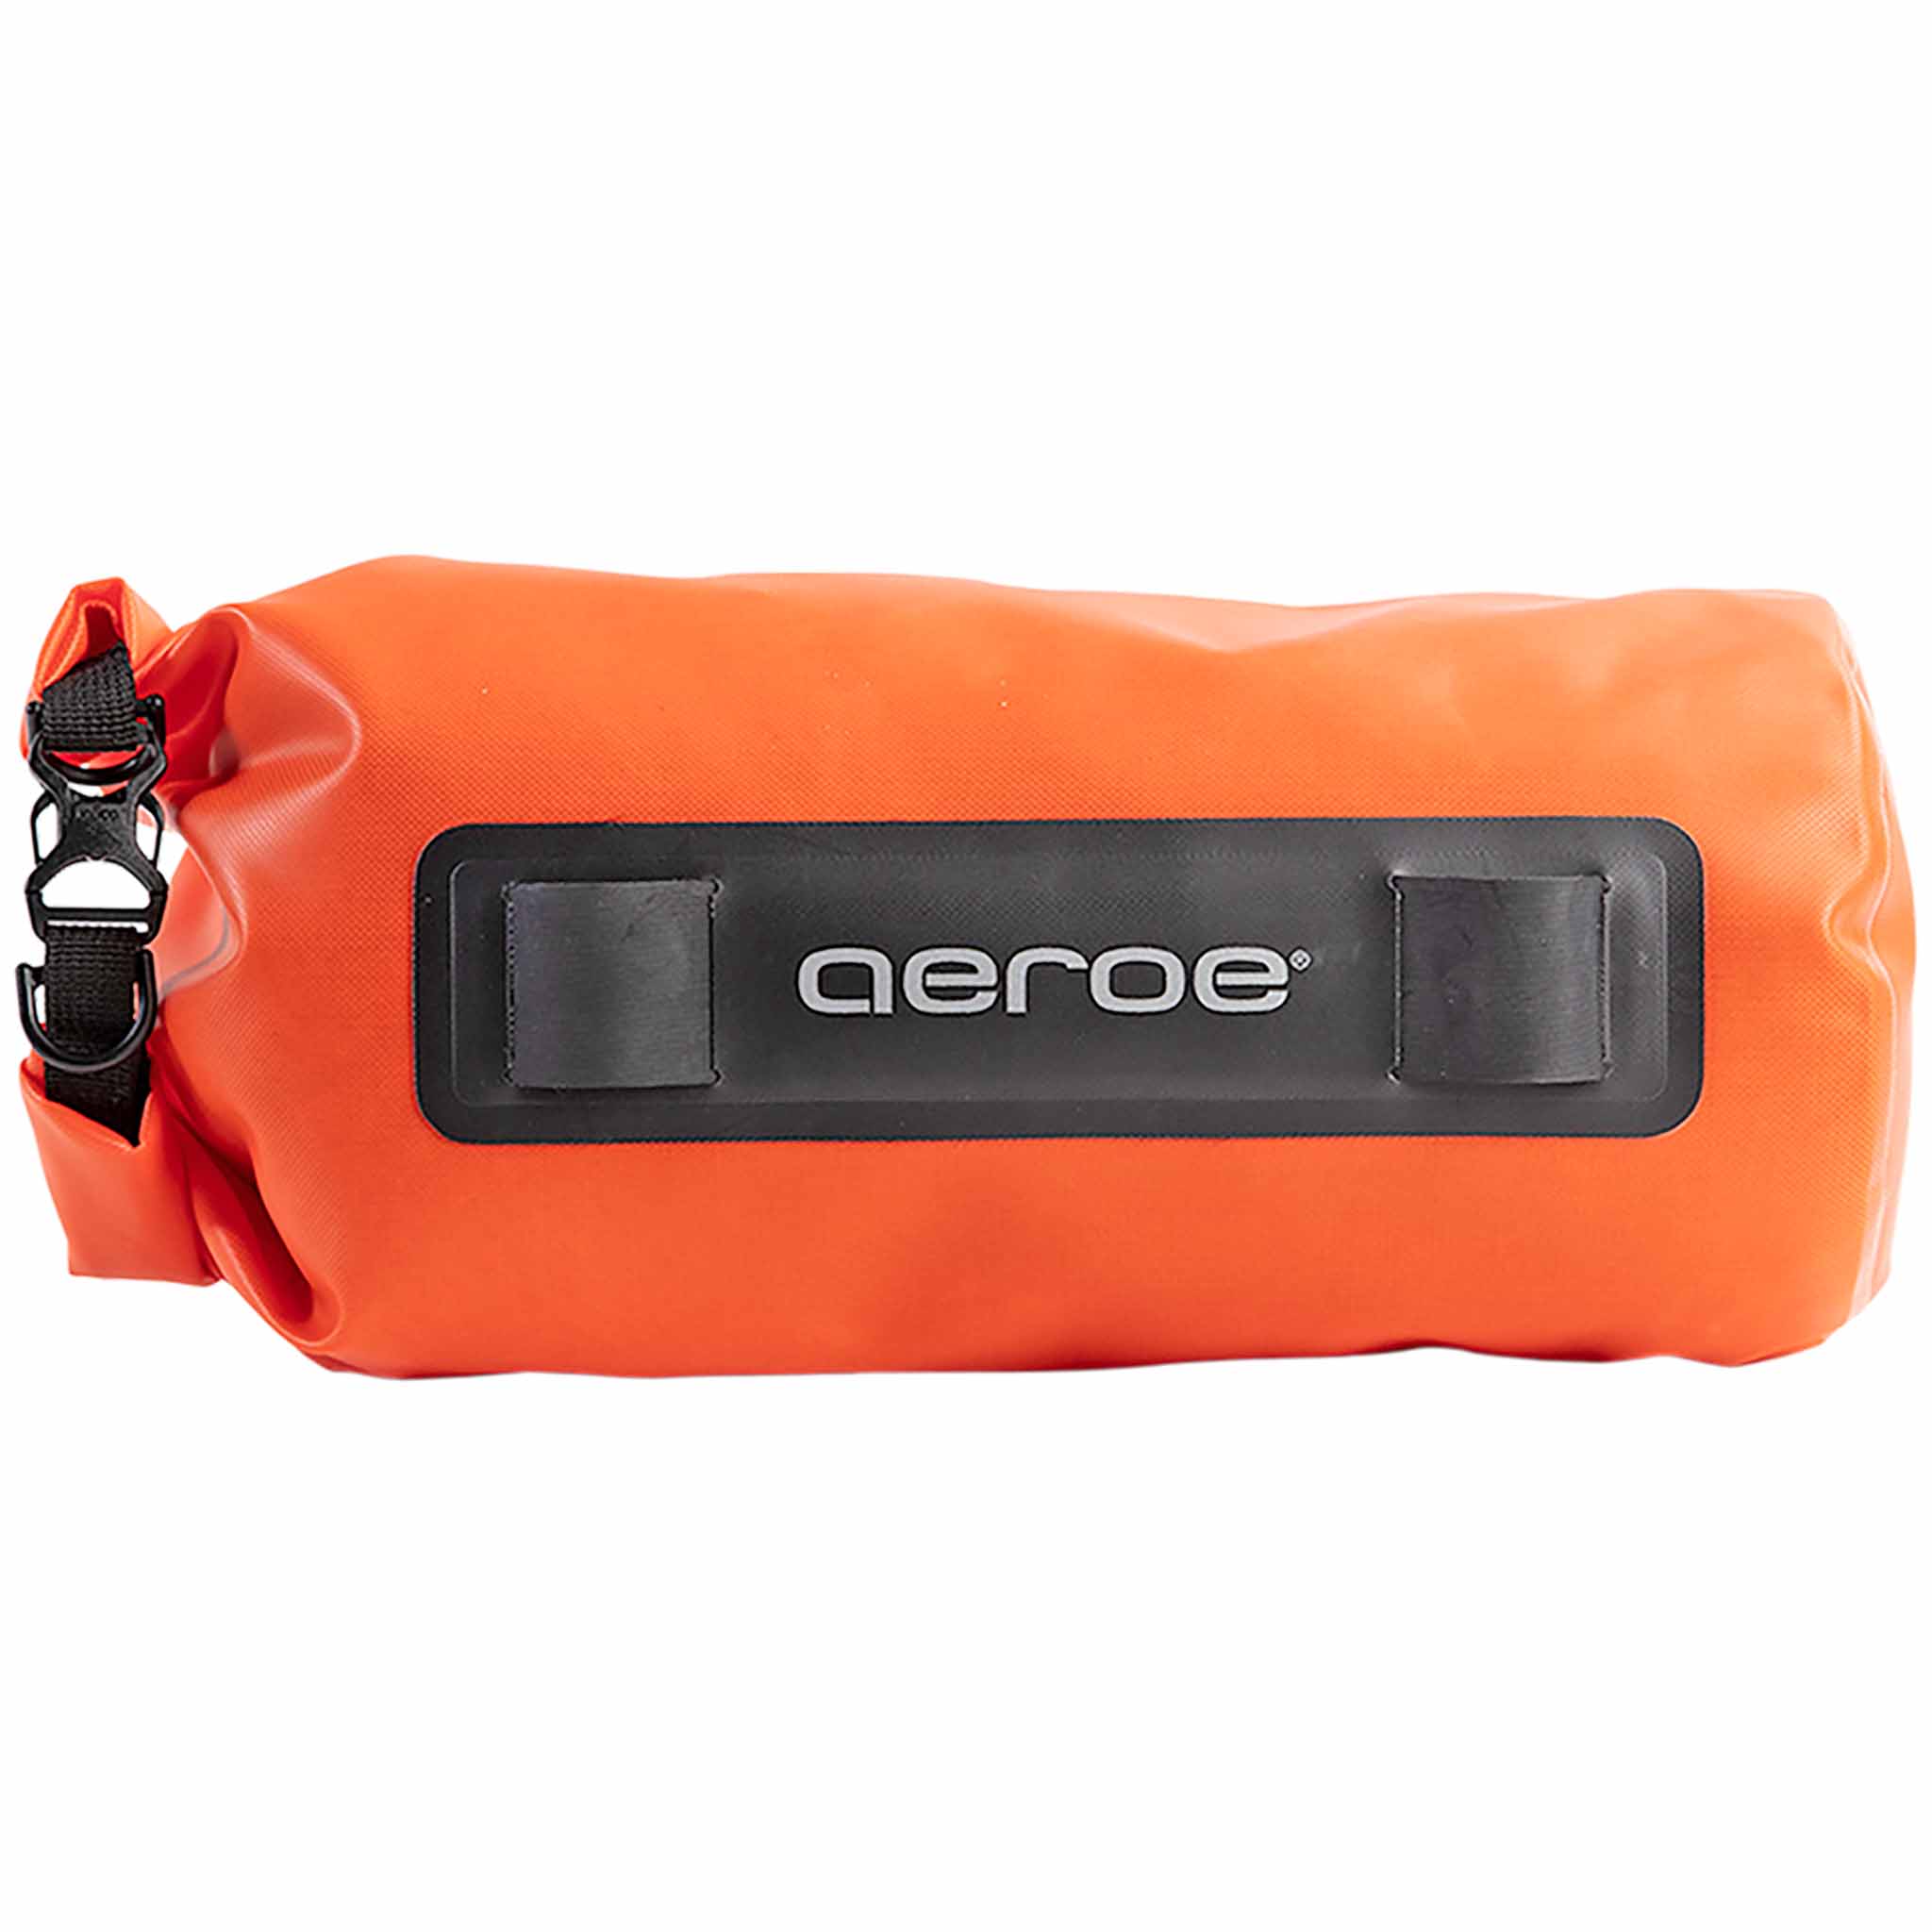 Aeroe Heavy Duty Dry Bag, 8 Liter, Orange